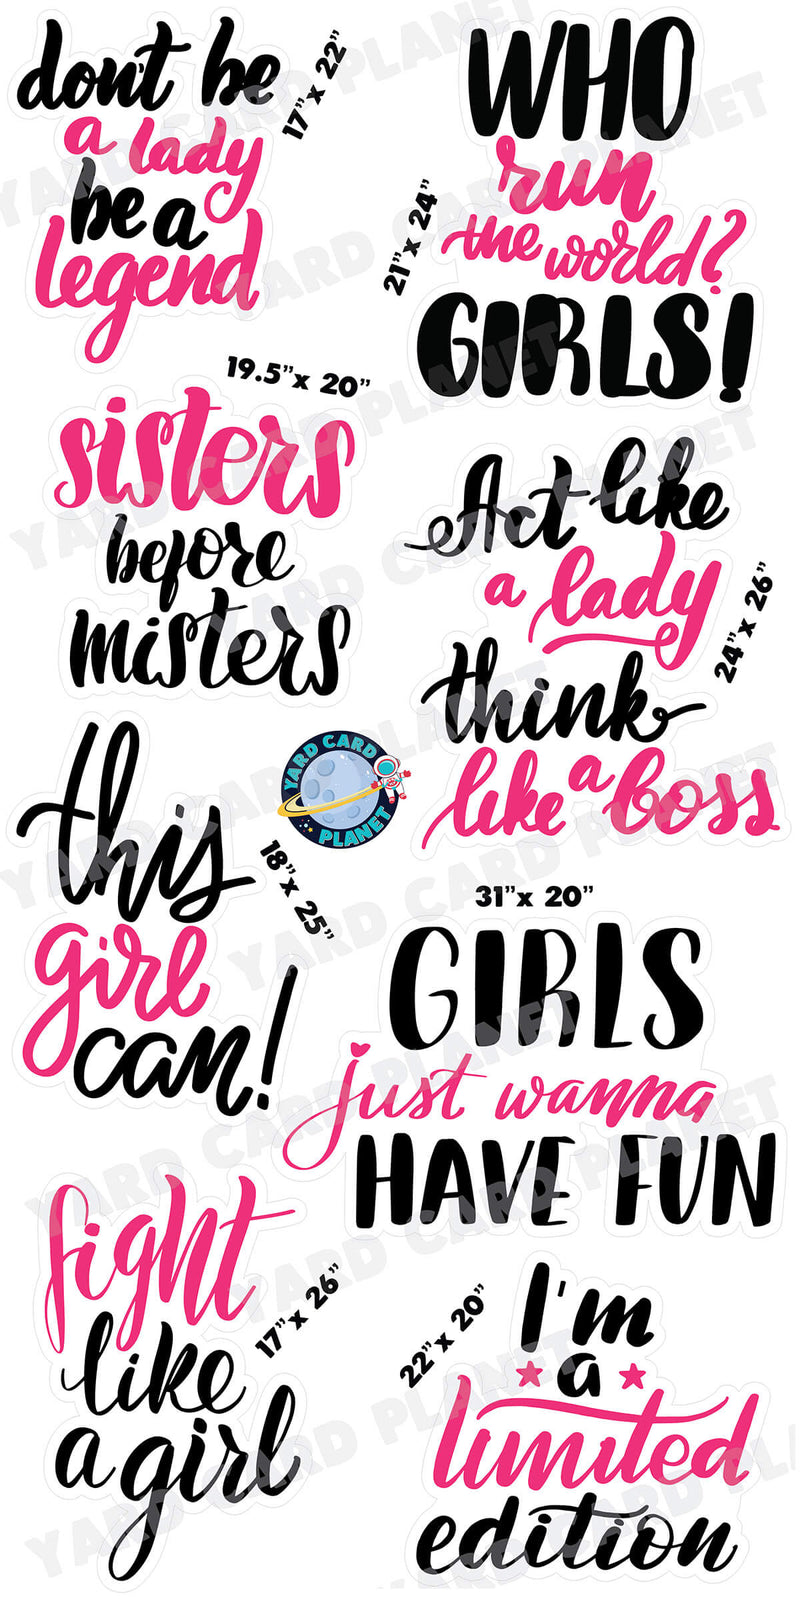 Girl Power Inspirational and Motivational Sayings Yard Card Flair Set